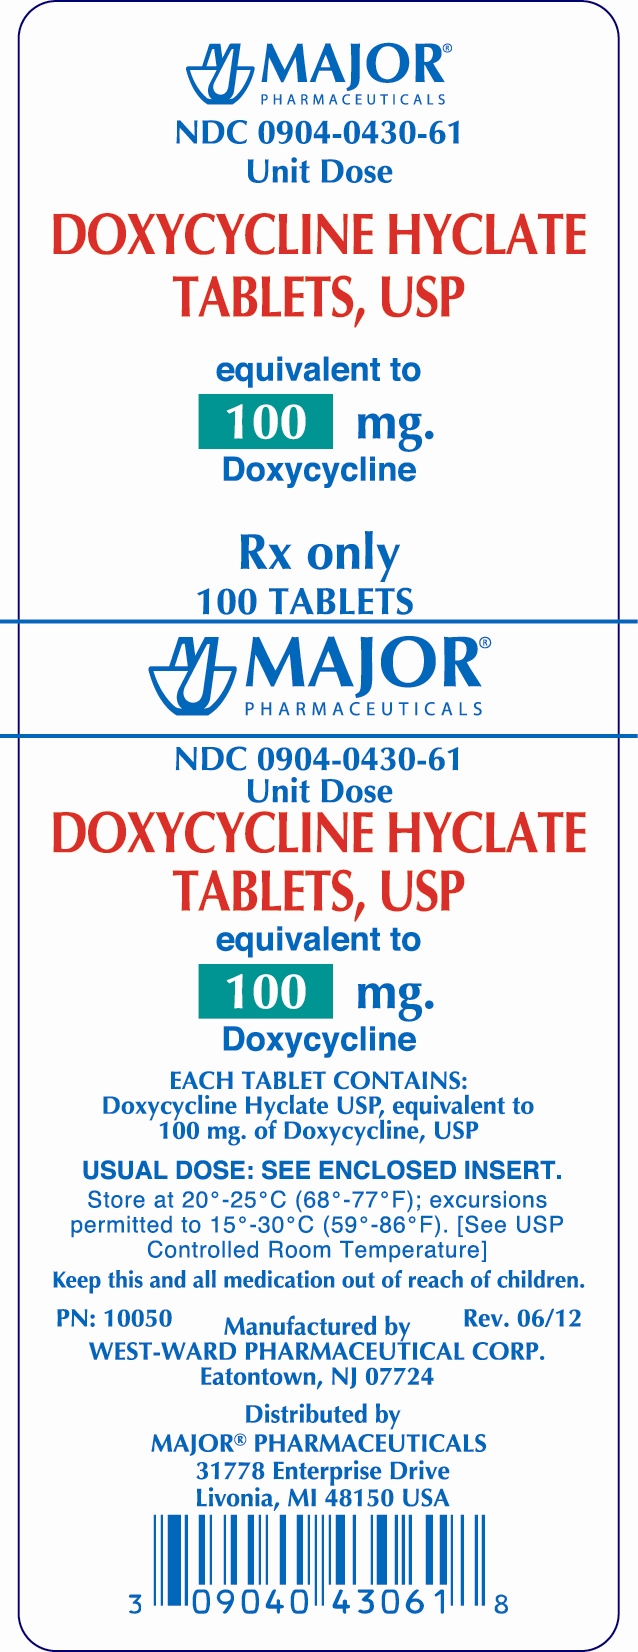 DOXYCYCLINE HYCLATE TABLETS, USP 100MG